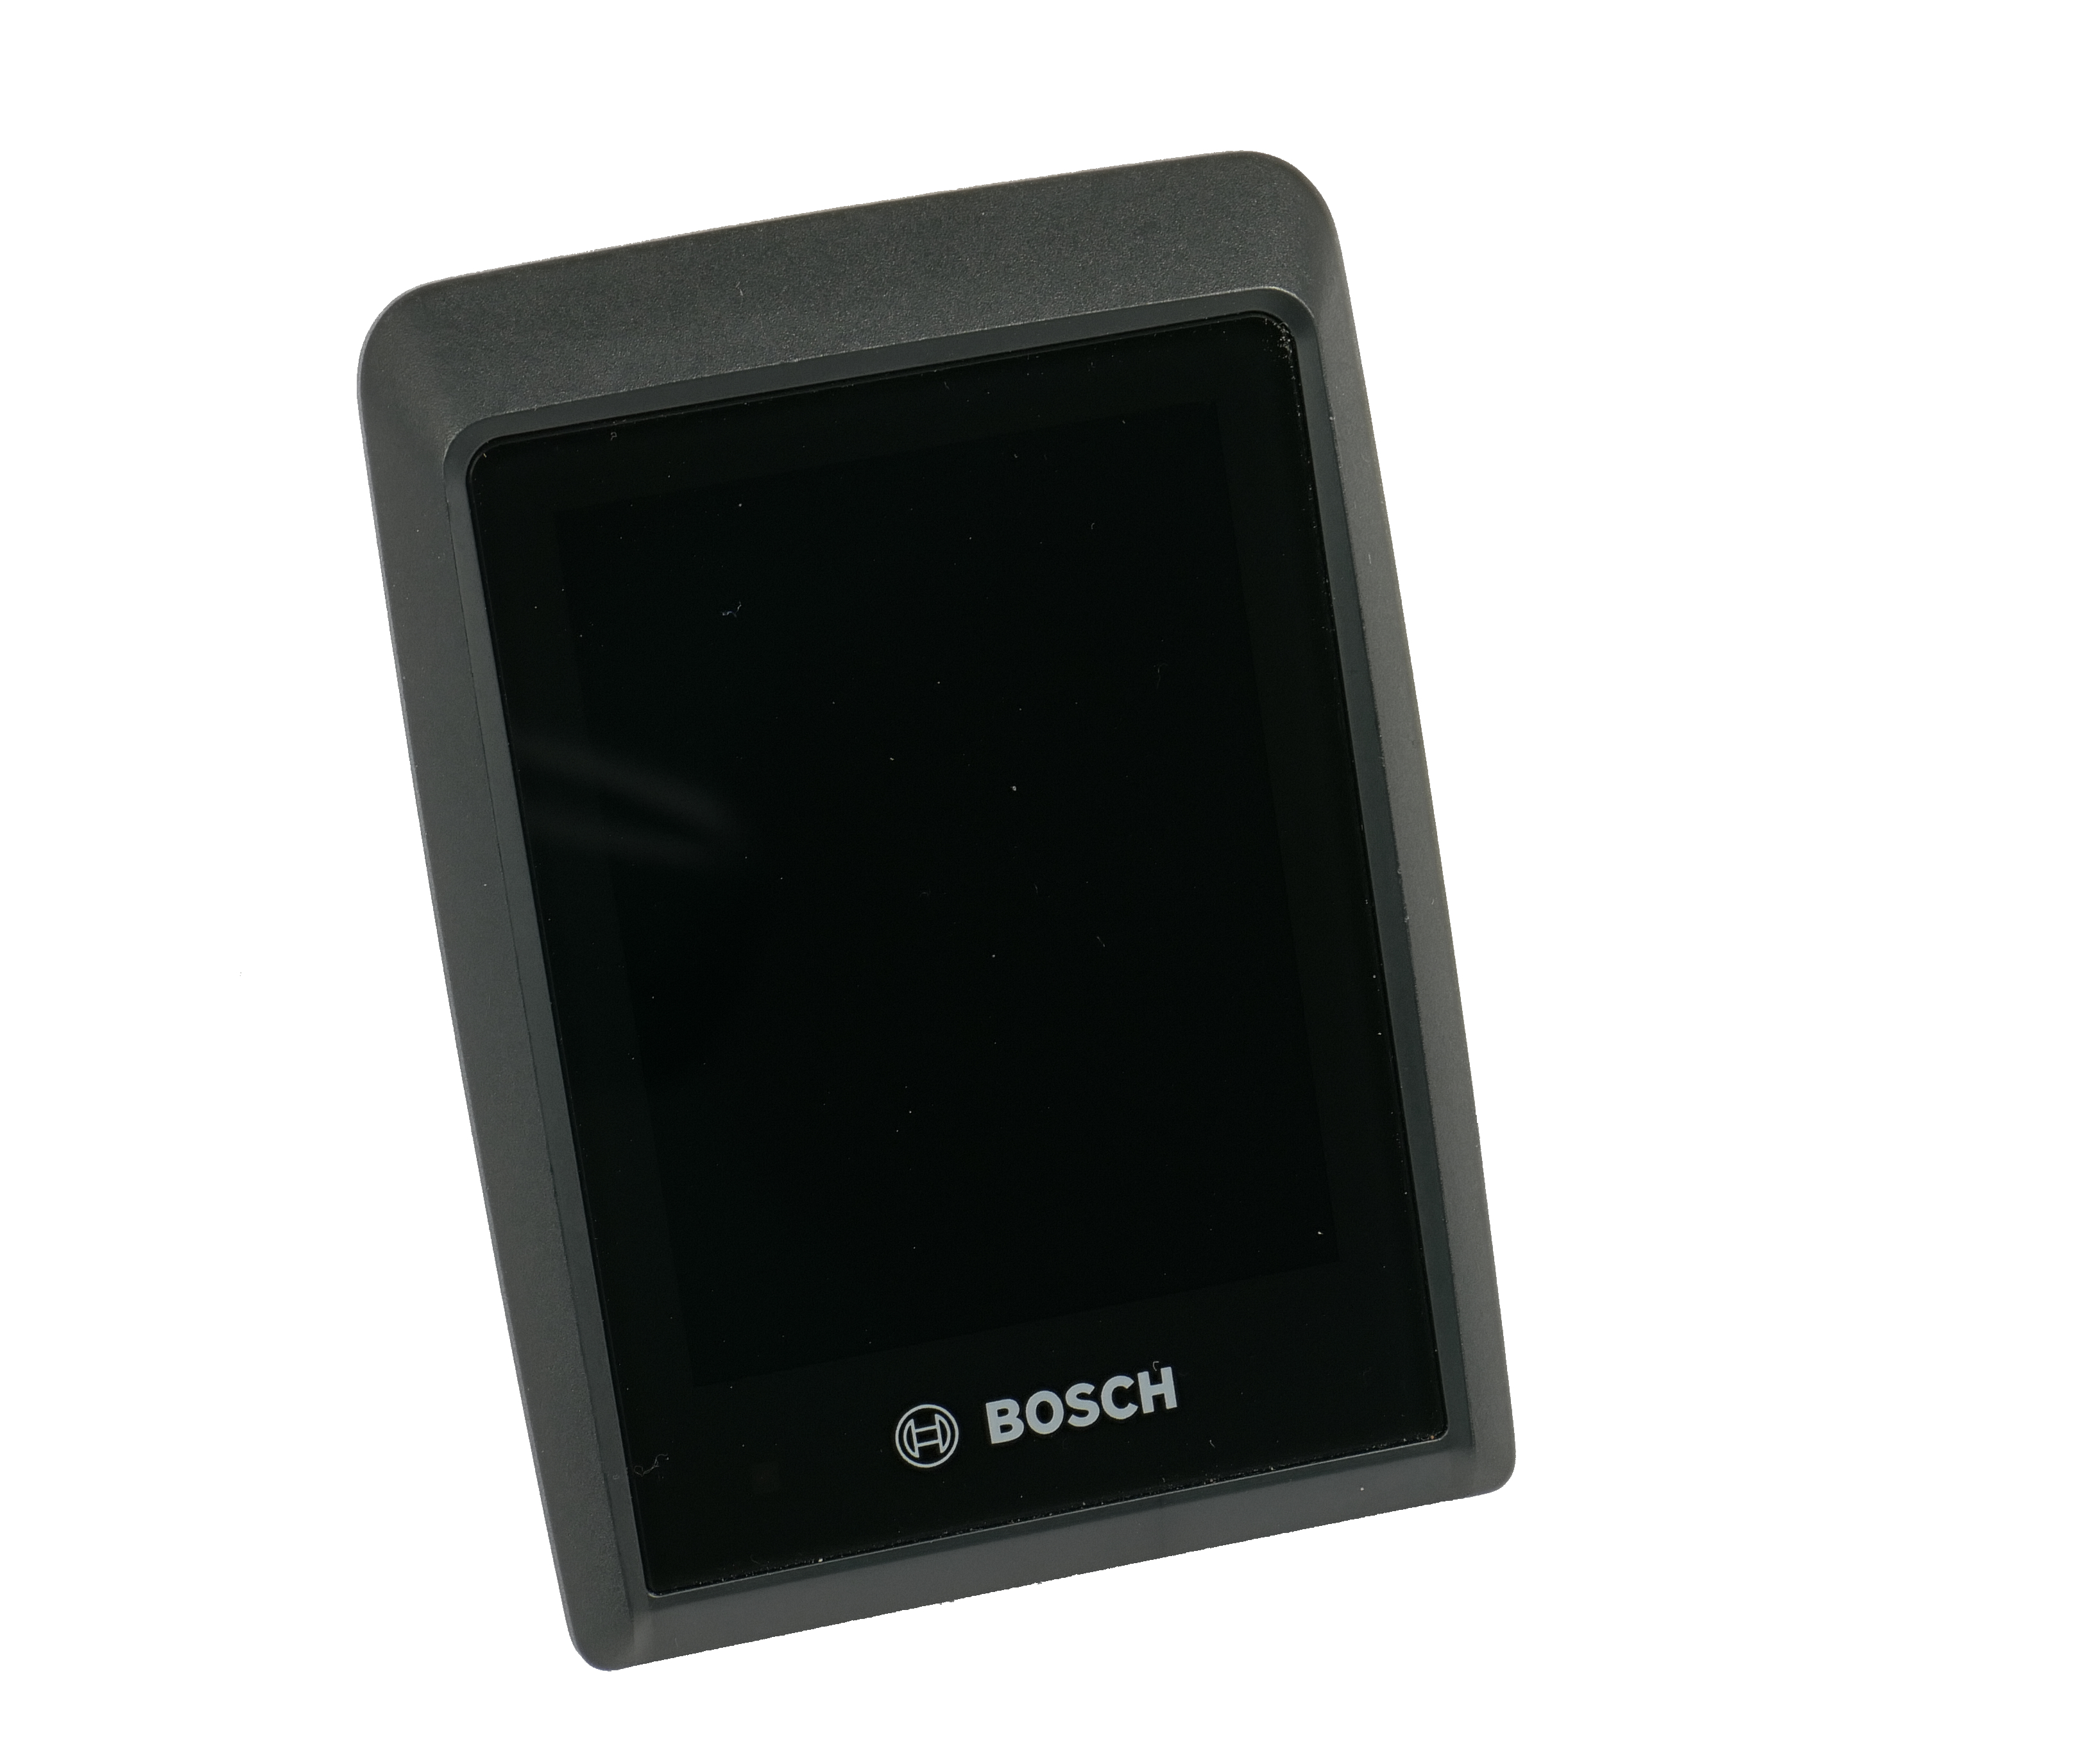 Bosch Kiox 300 E-Bike Display for Smart System